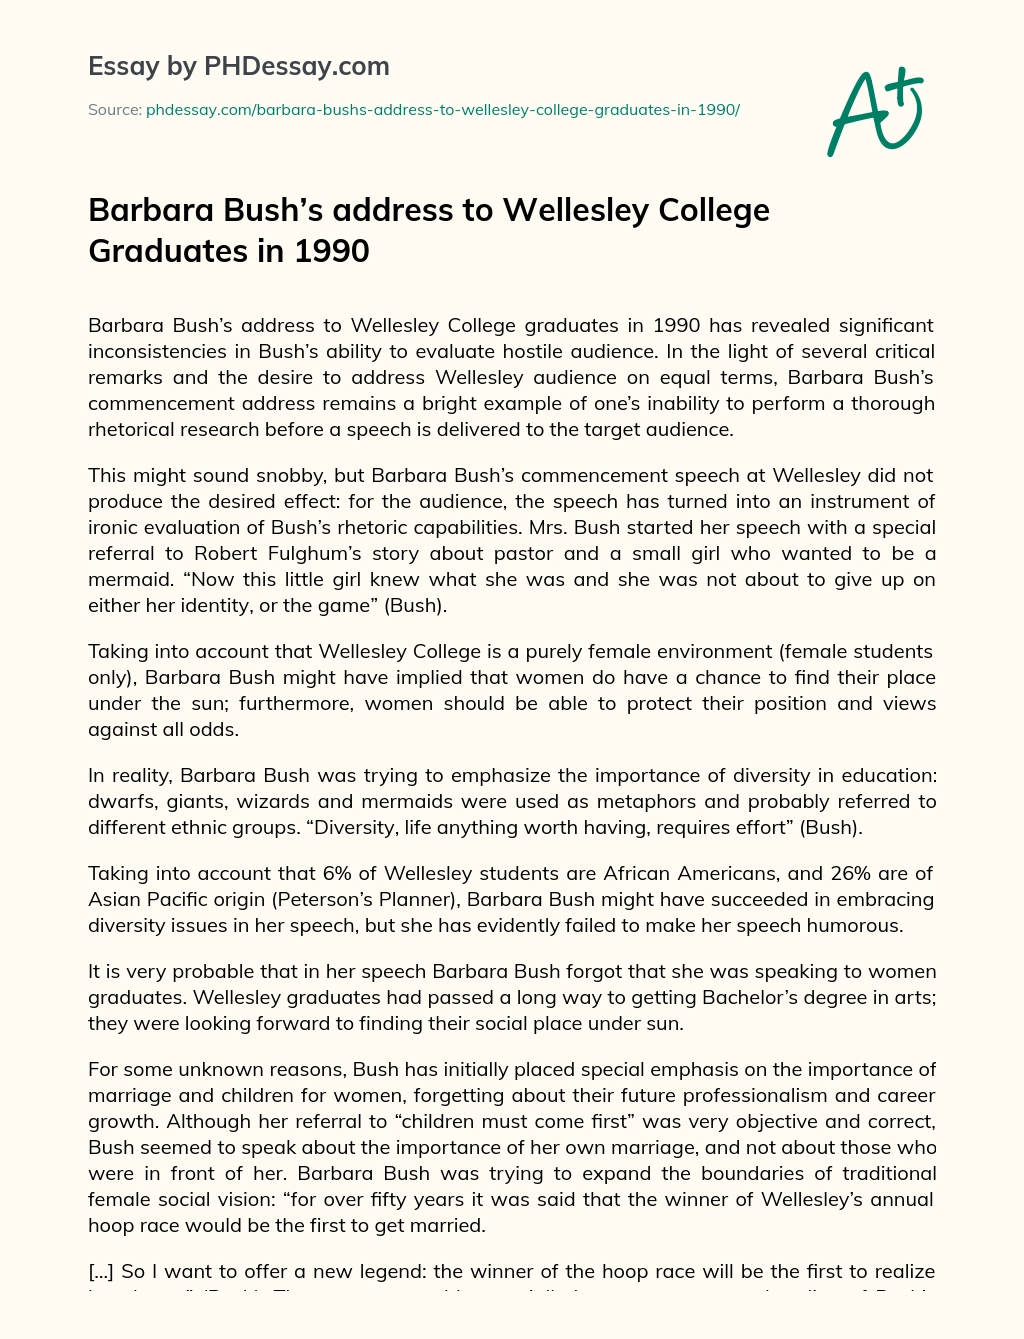 Barbara Bush’s address to Wellesley College Graduates in 1990 essay